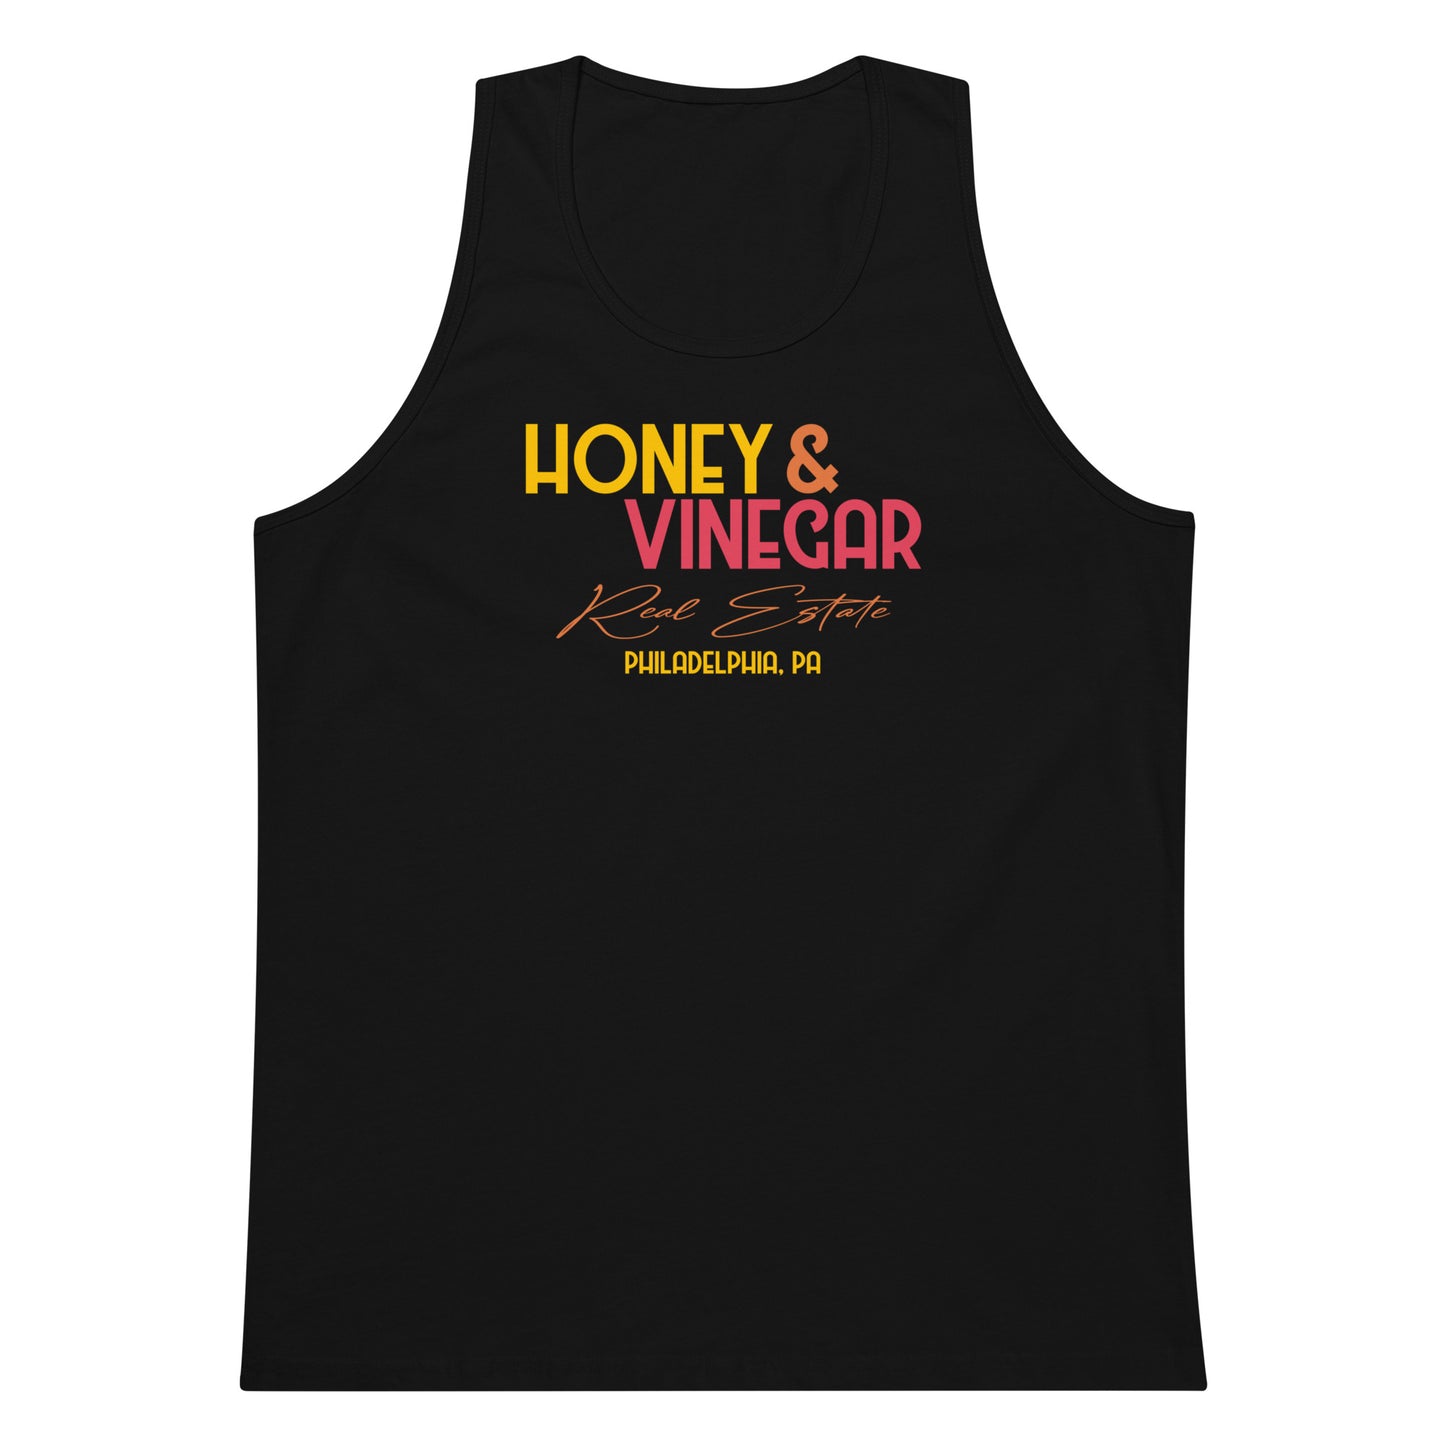 Honey & Vinegar premium tank top